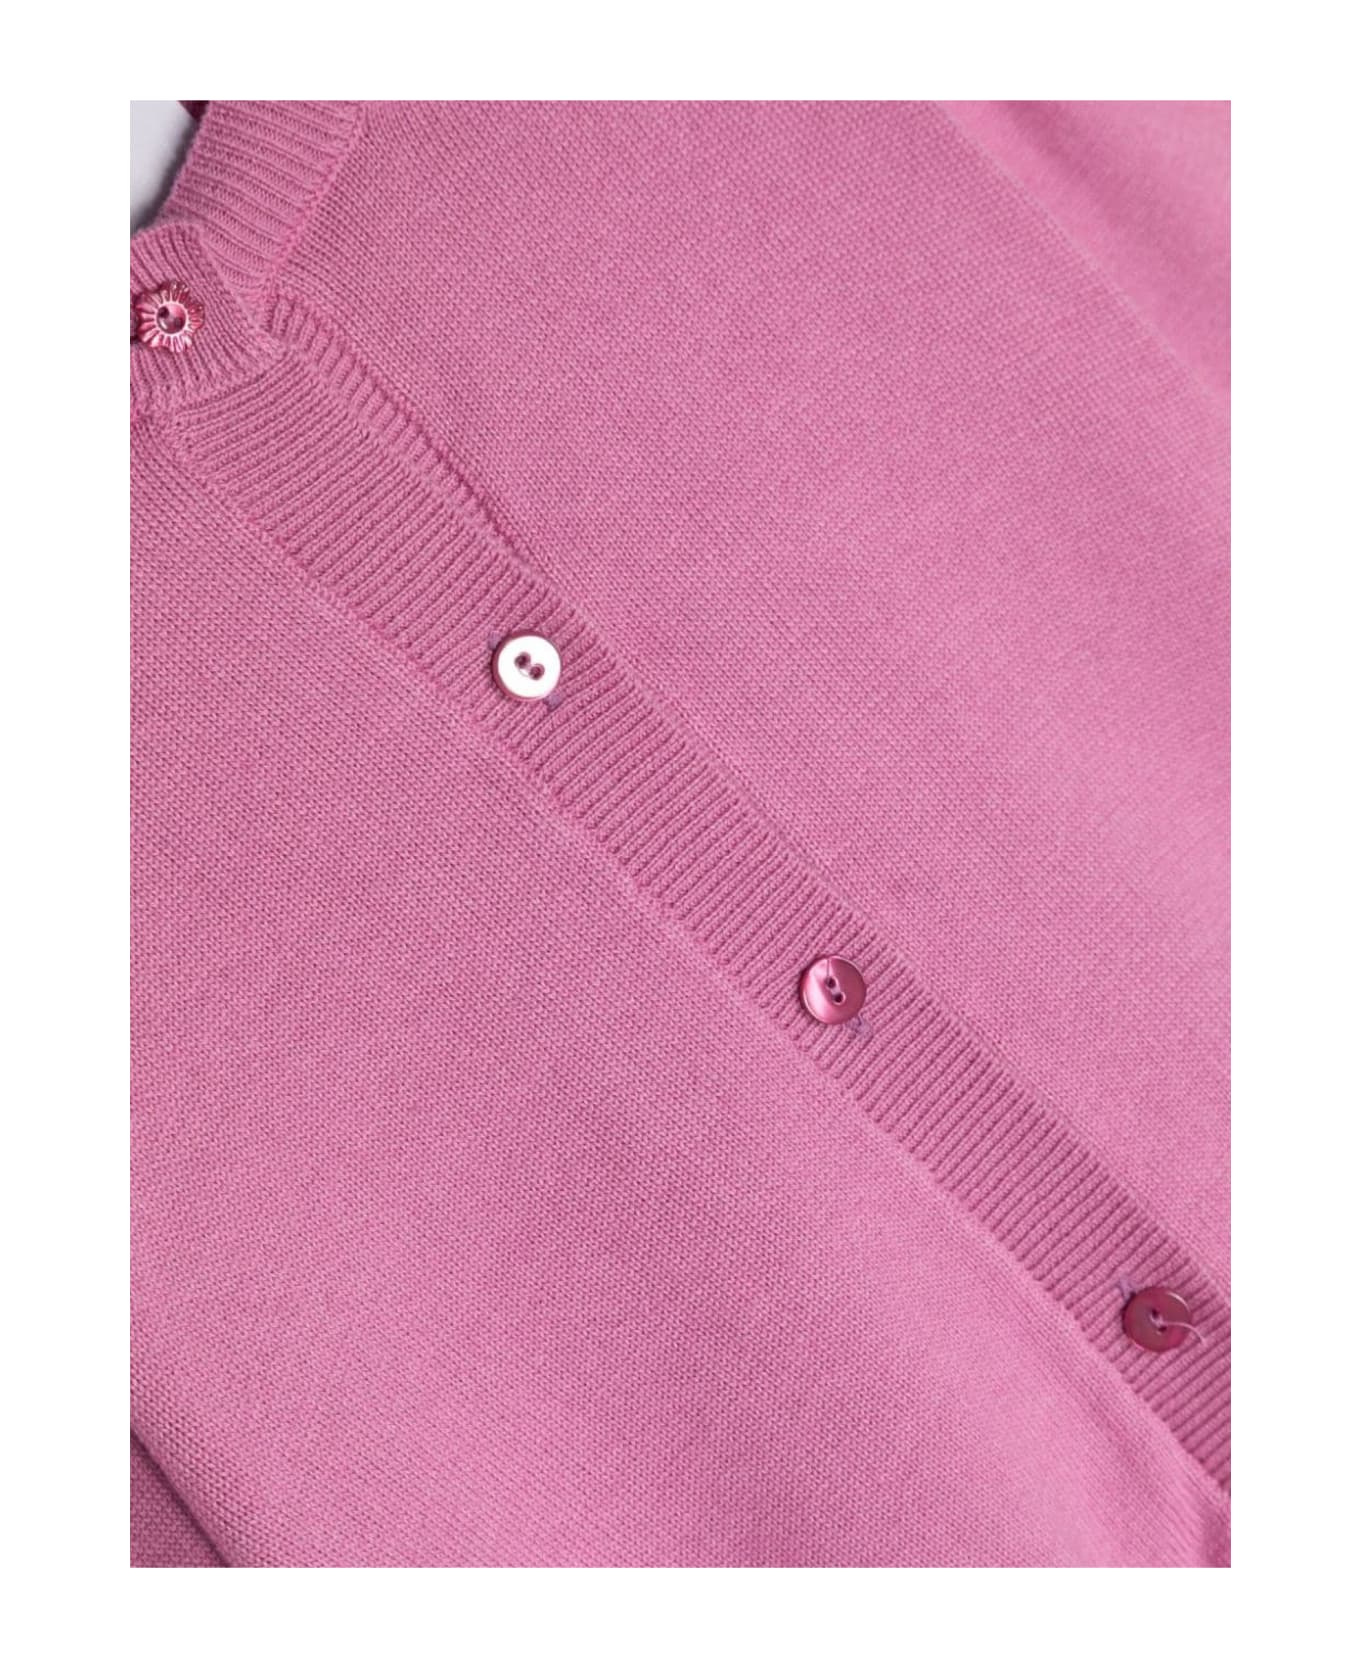 Simonetta Sweaters Pink - Pink